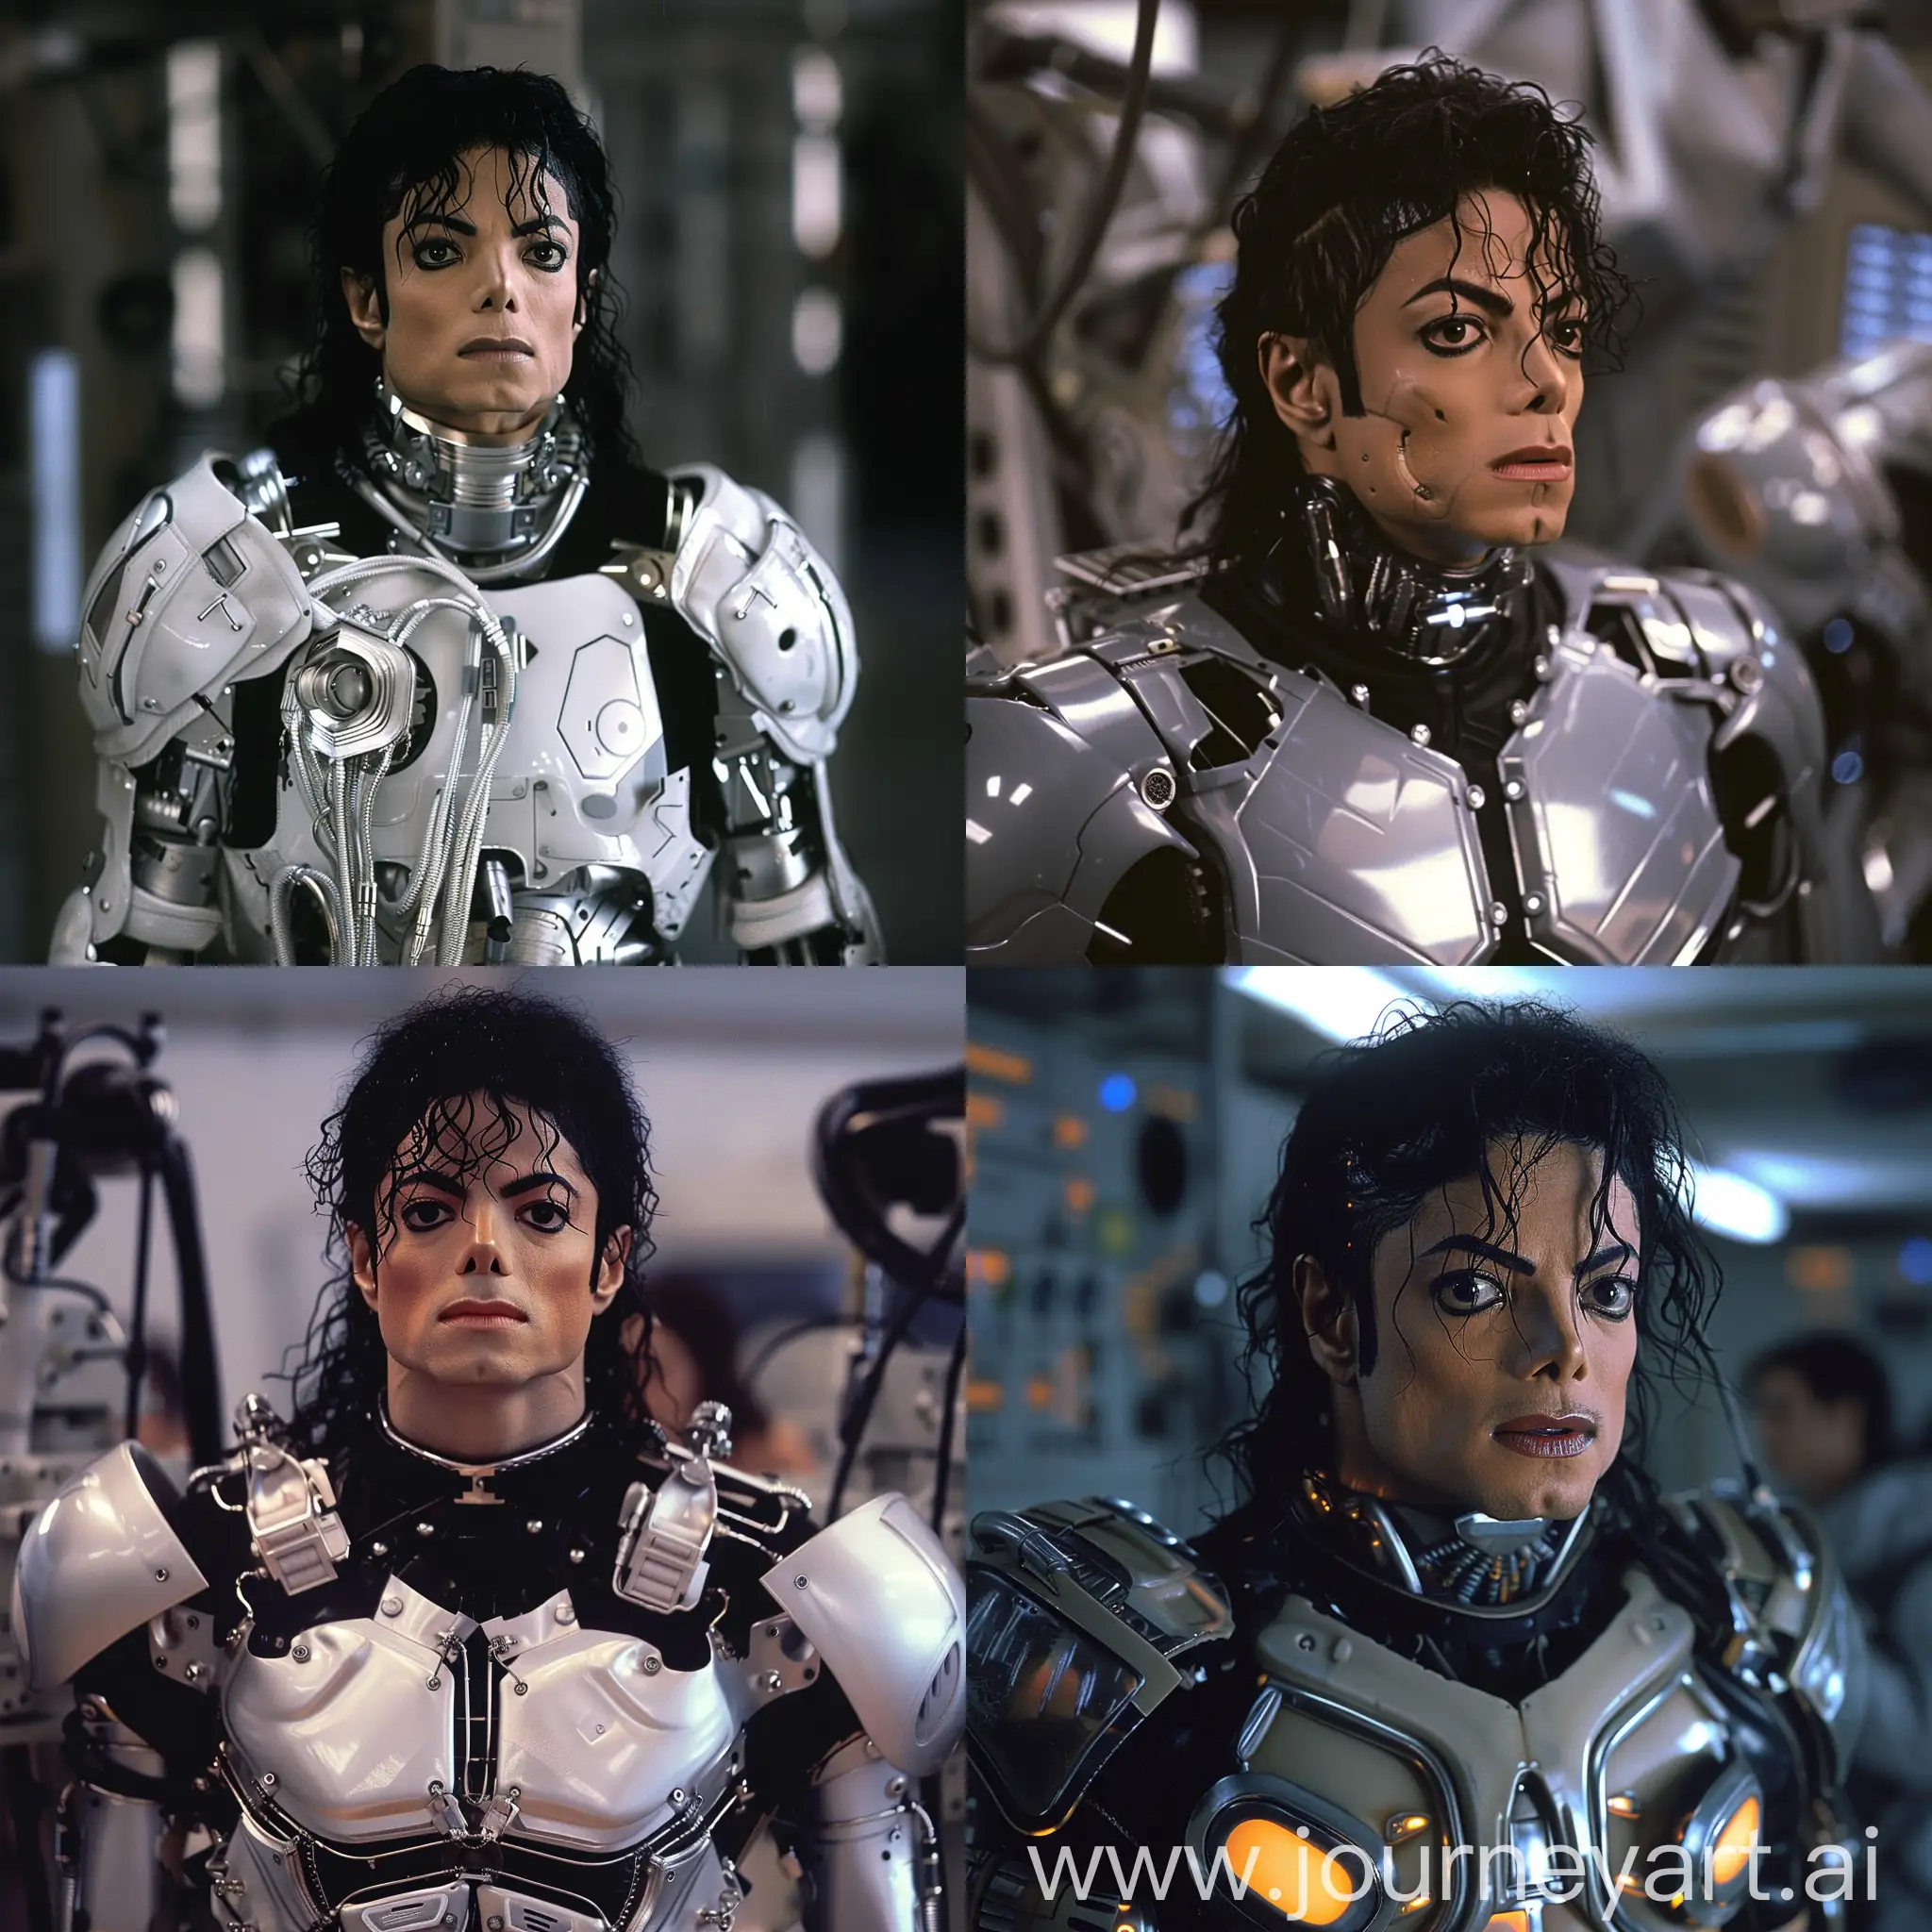 Michael-Jackson-in-Cybernetic-Suit-HyperRealistic-Portrayal